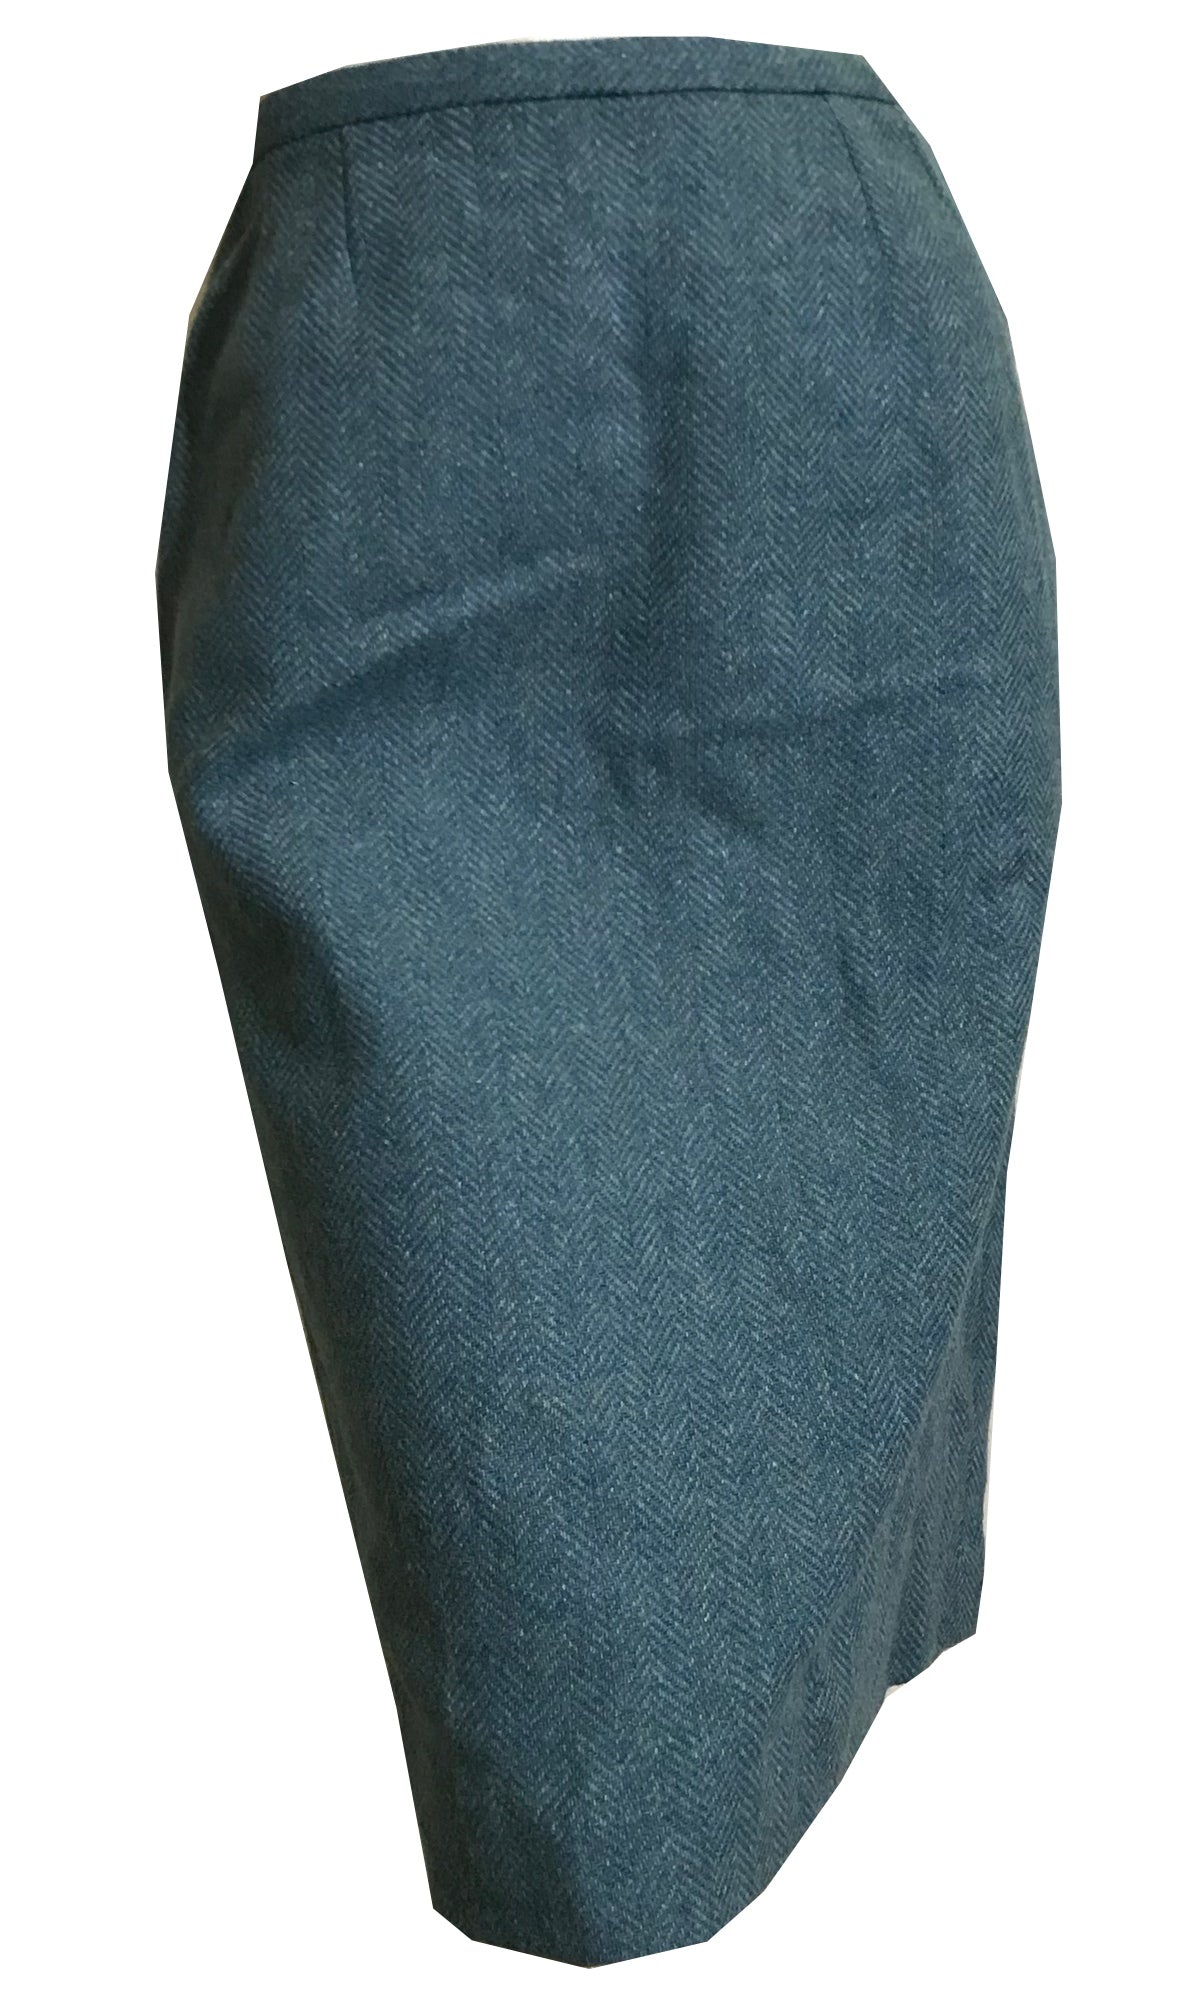 Herringbone Weave Aqua Blue Wool Pencil Skirt circa 1960s